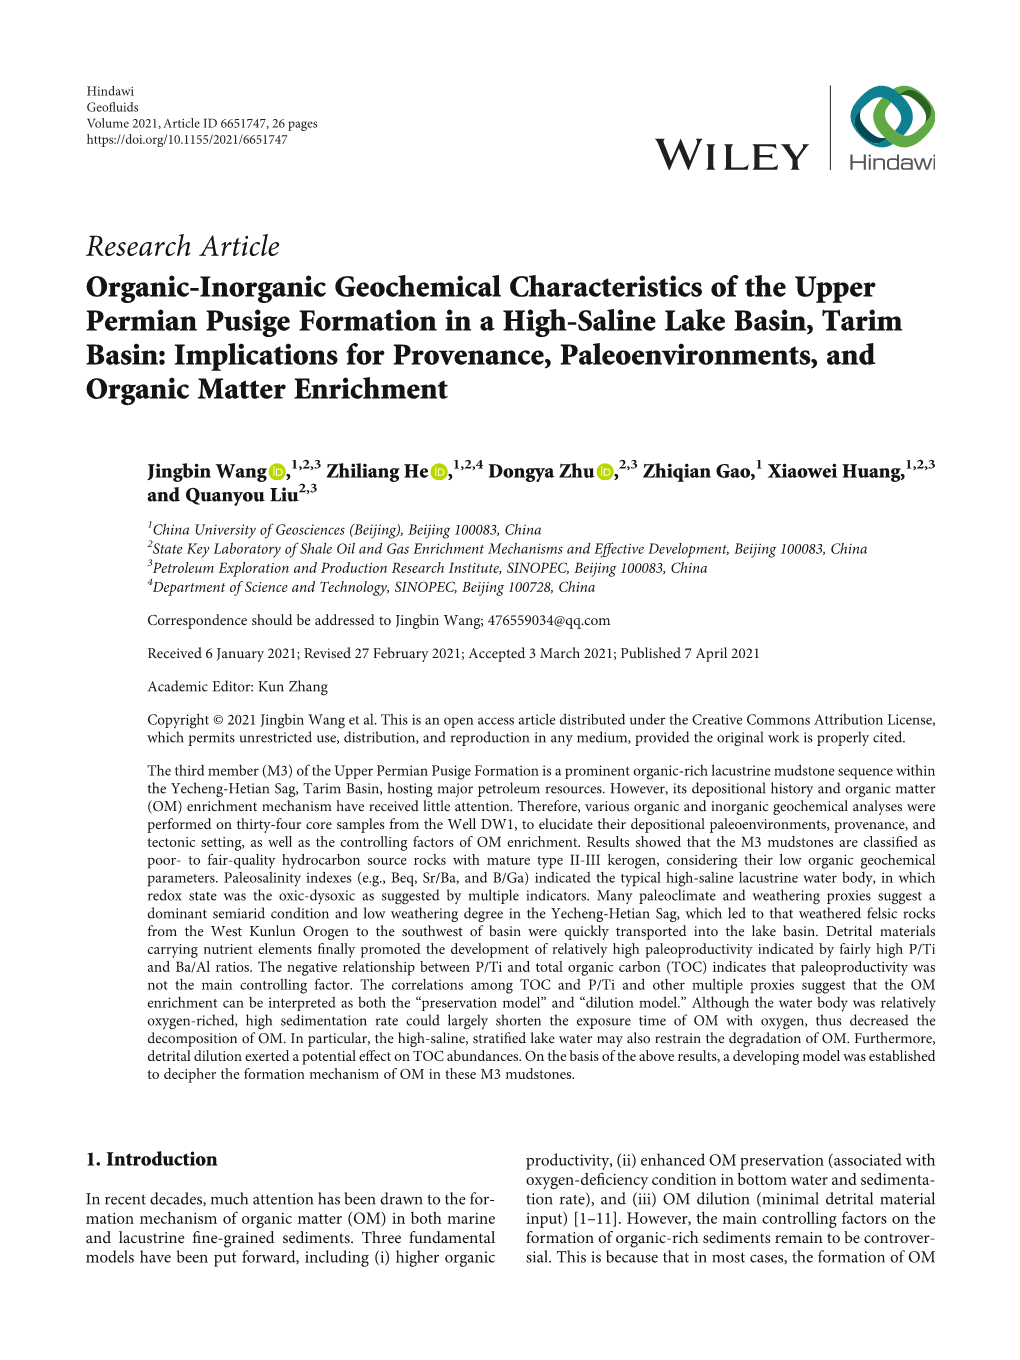 Organic-Inorganic Geochemical Characteristics of the Upper